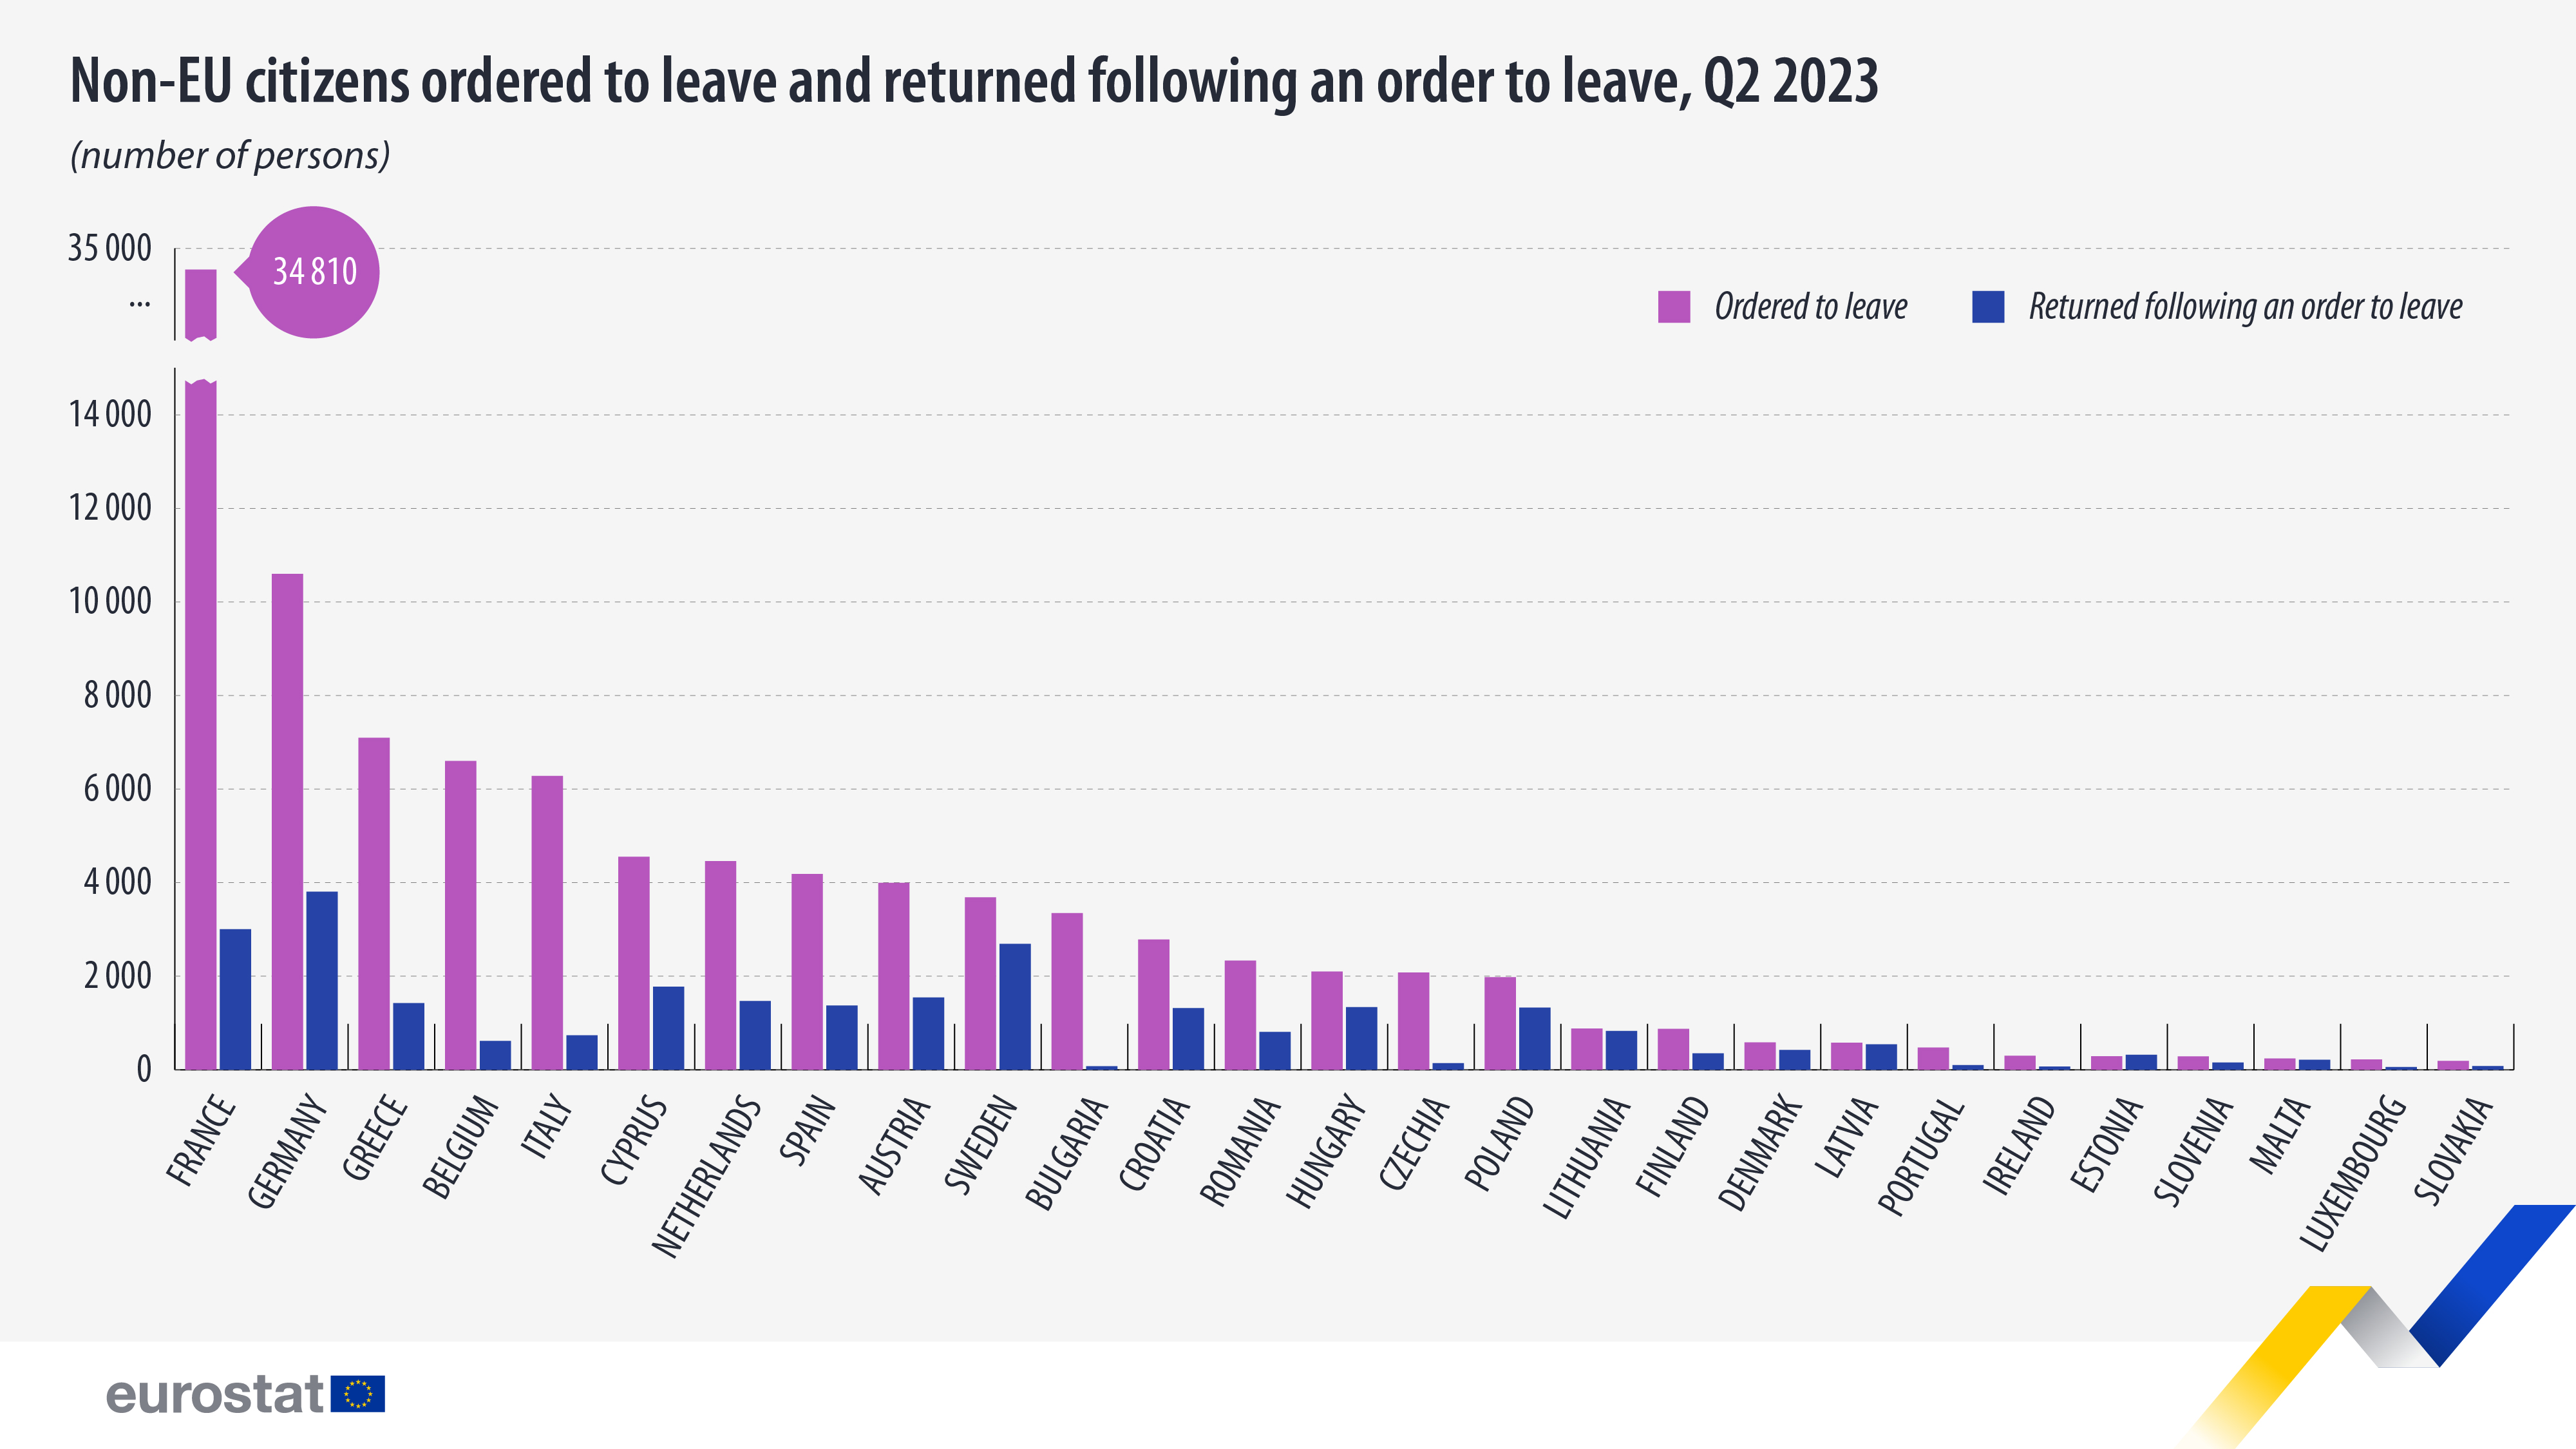 Returns of irregular migrants - quarterly statistics